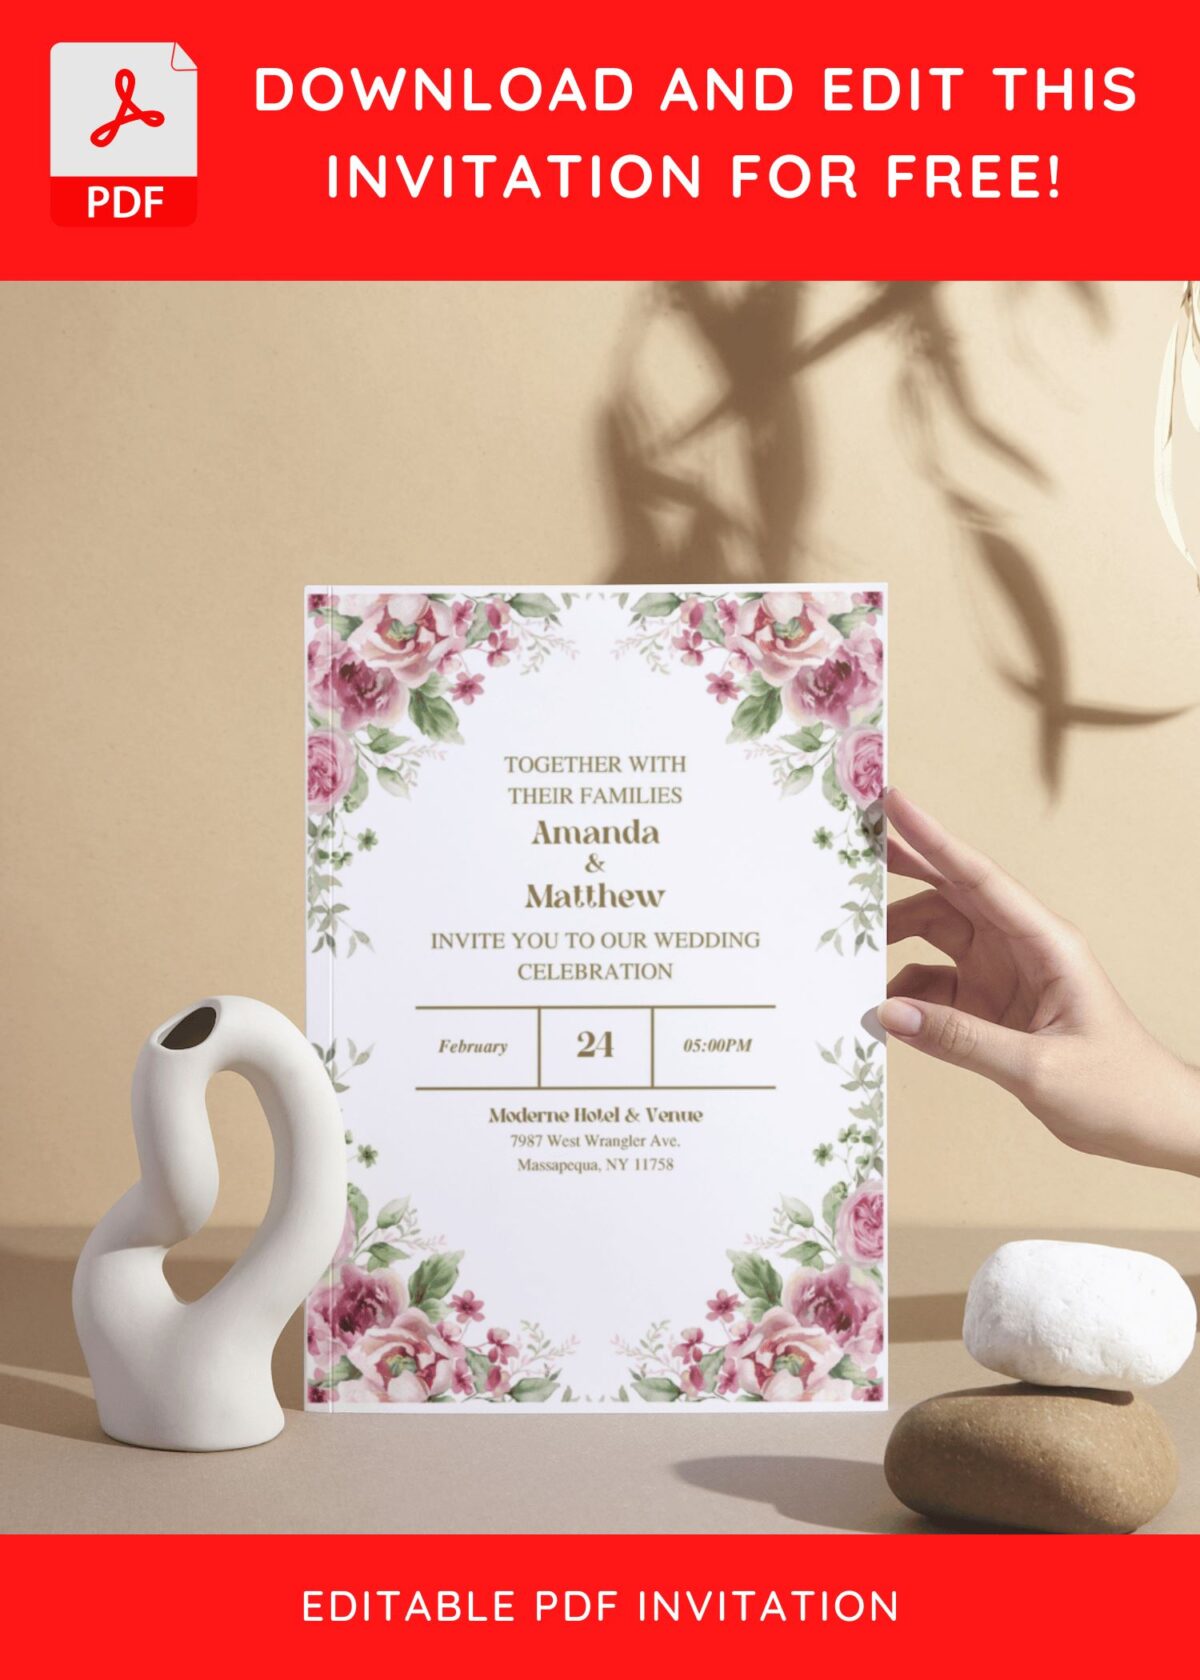 (Free Editable PDF) Beautiful Garden-Fresh Wedding Invitation Templates I